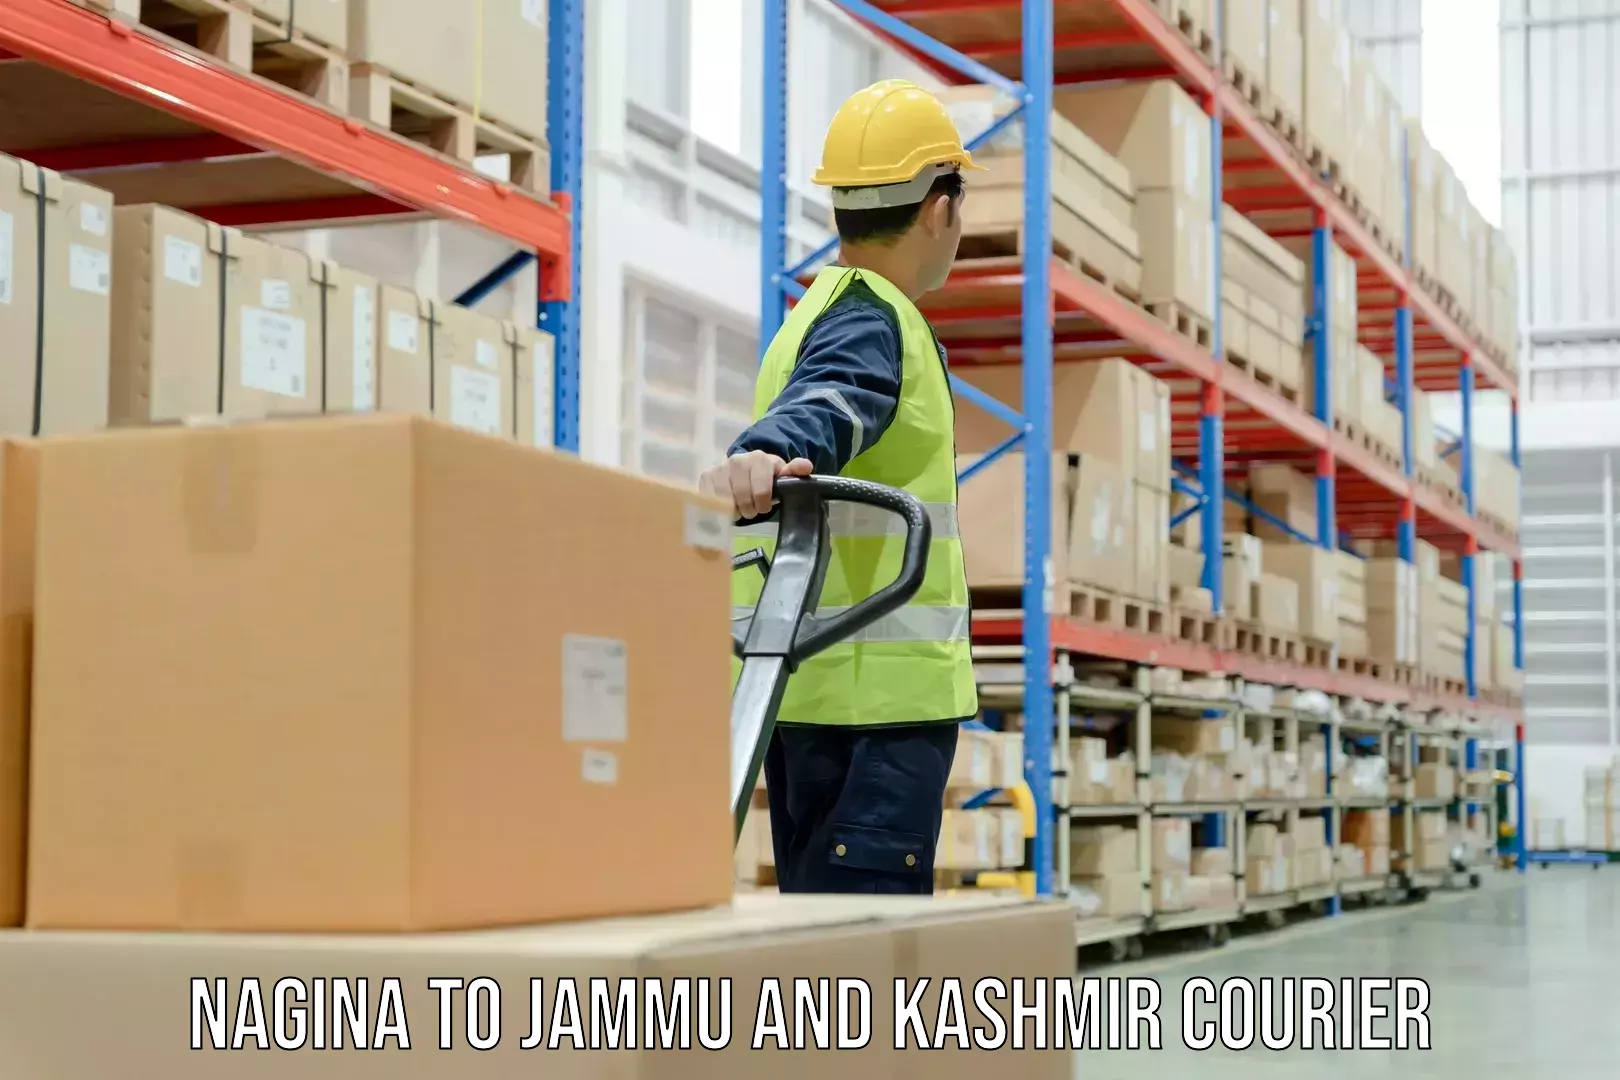 Courier service partnerships Nagina to Srinagar Kashmir